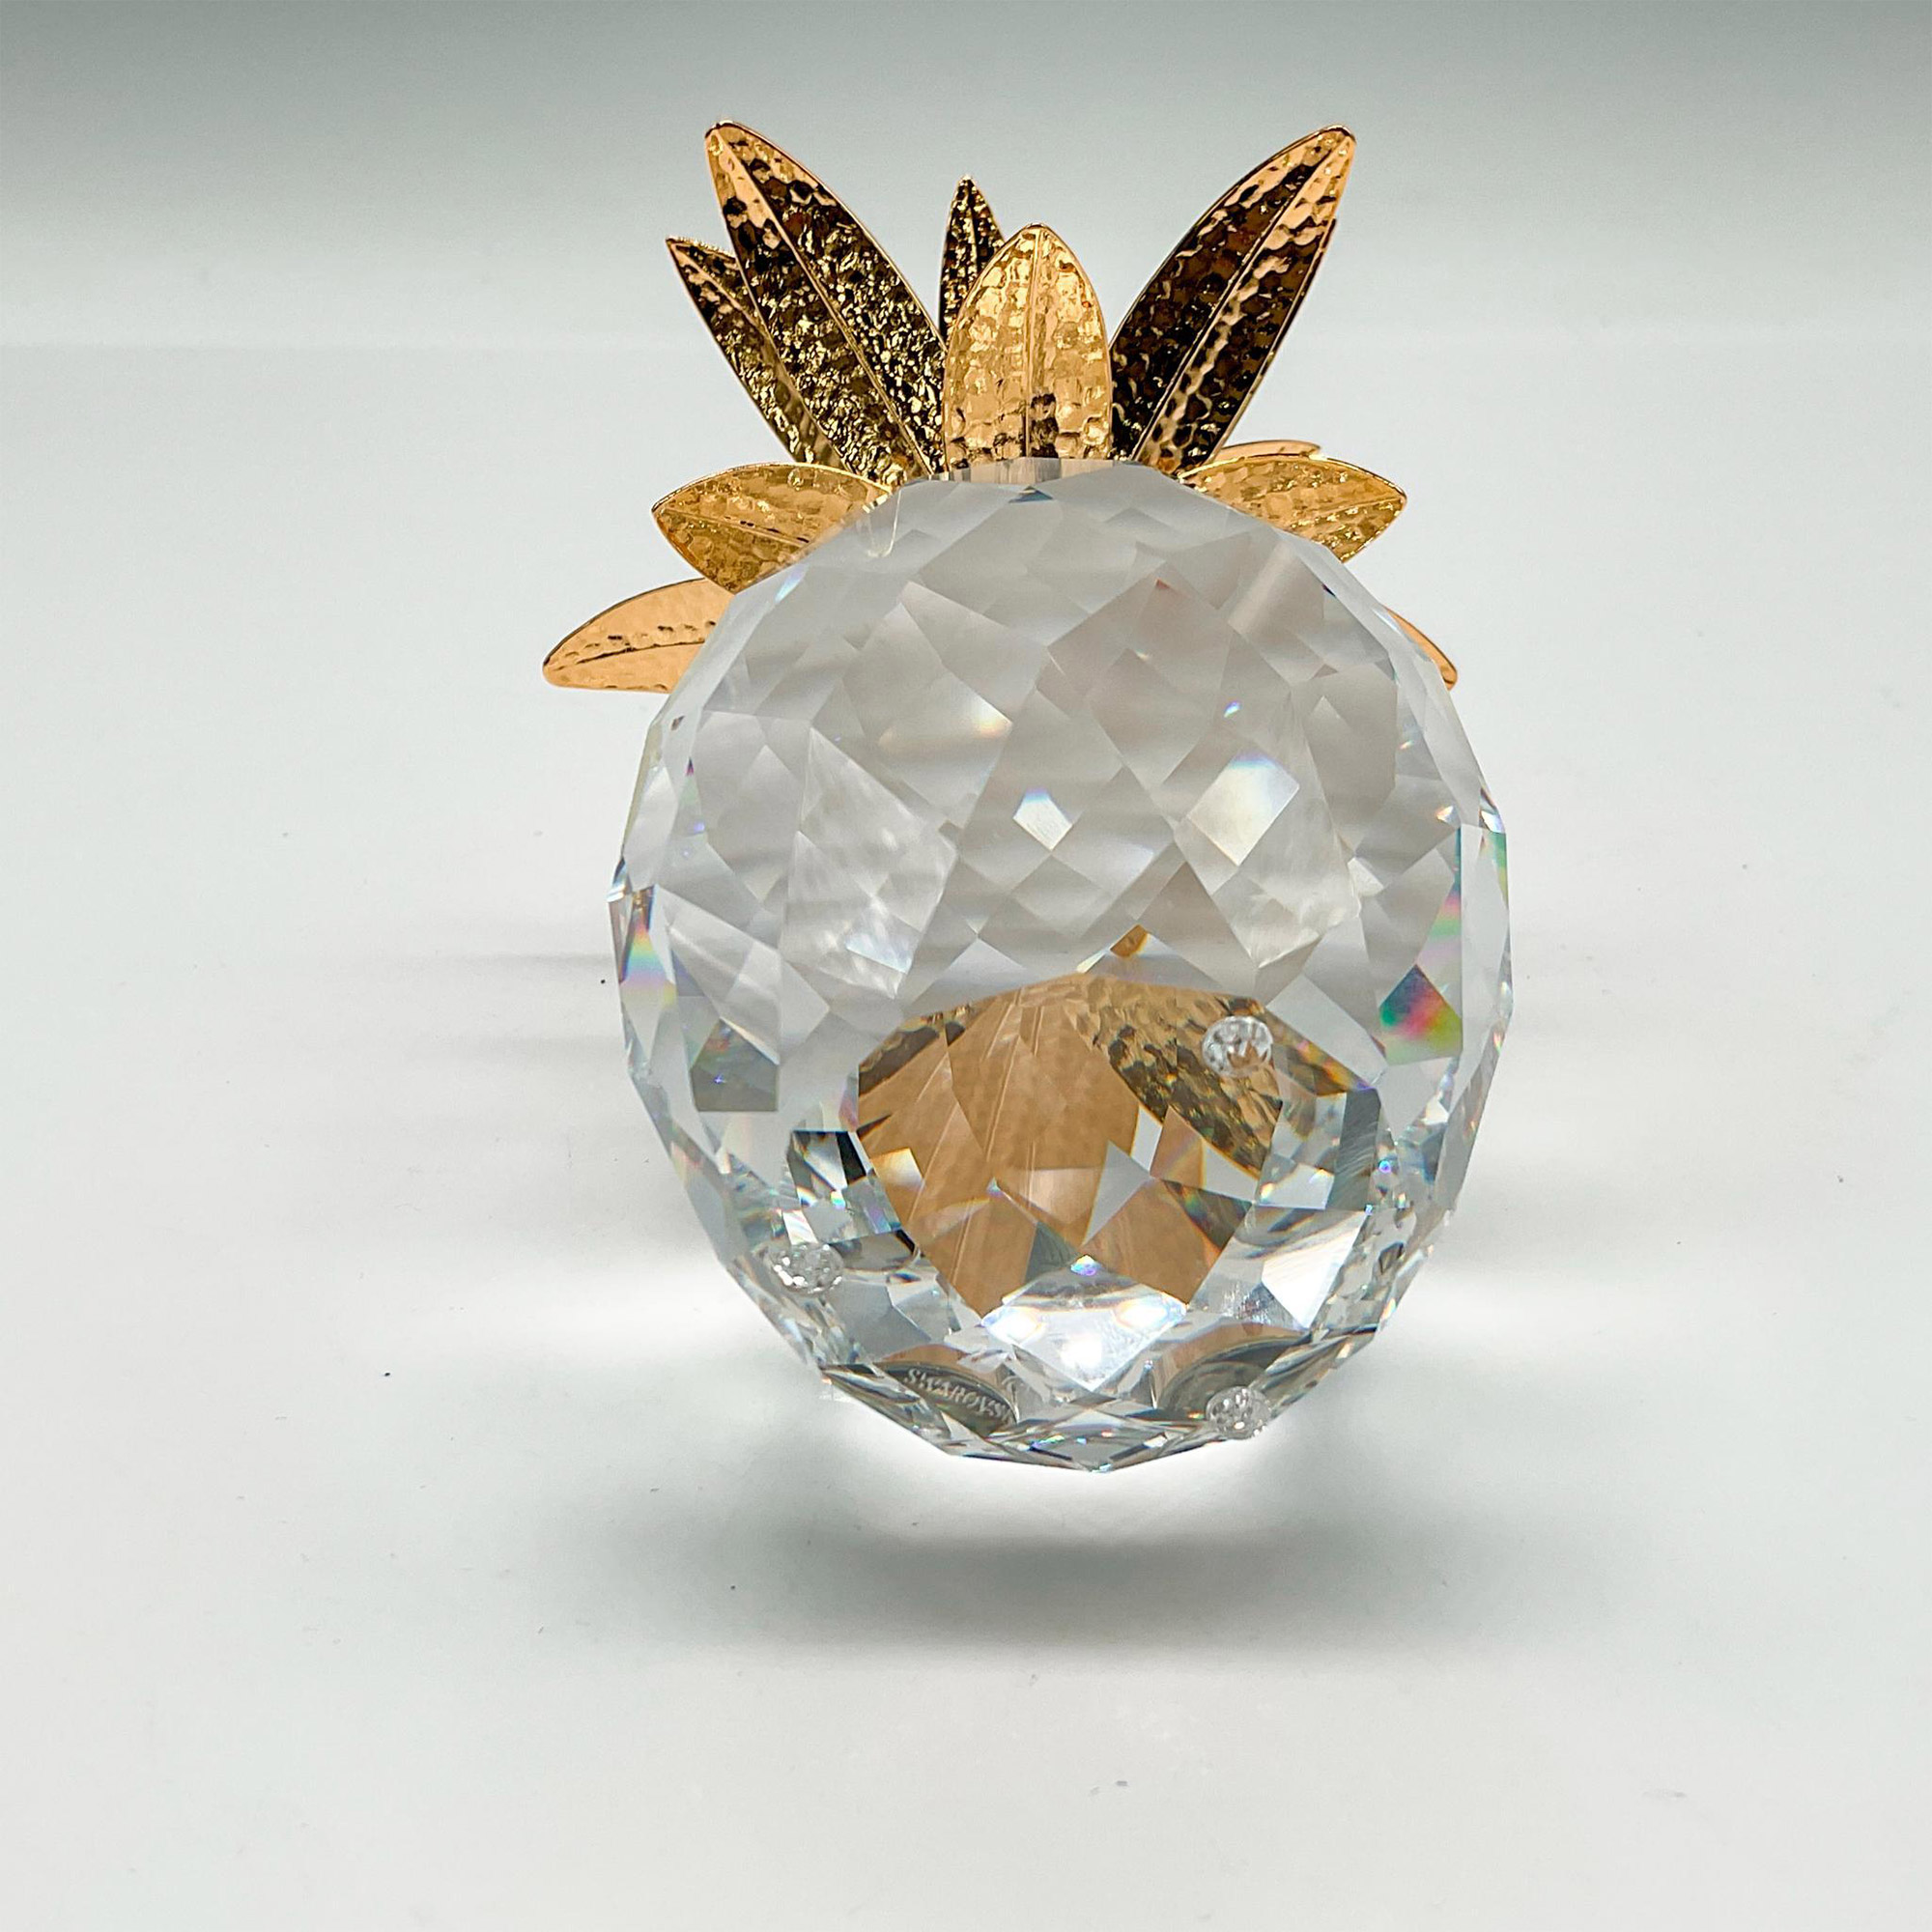 Swarovski Crystal Figurine, Pineapple - Image 3 of 4